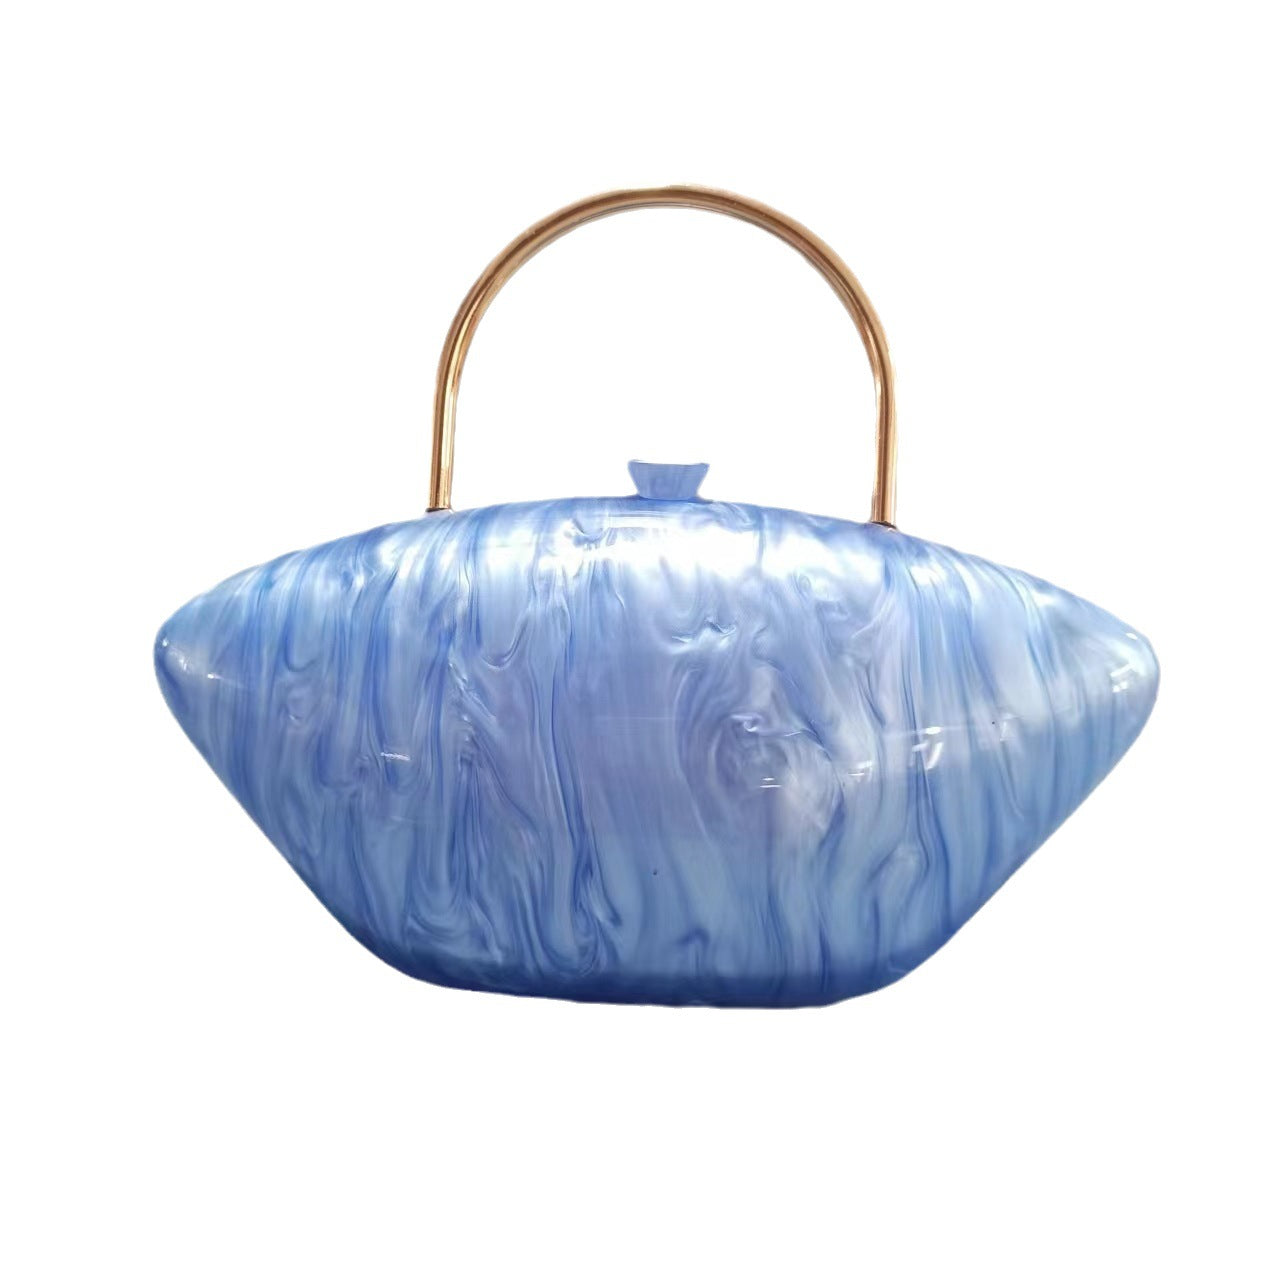 Iridescent Pearl Shell Acrylic Clutch Bag